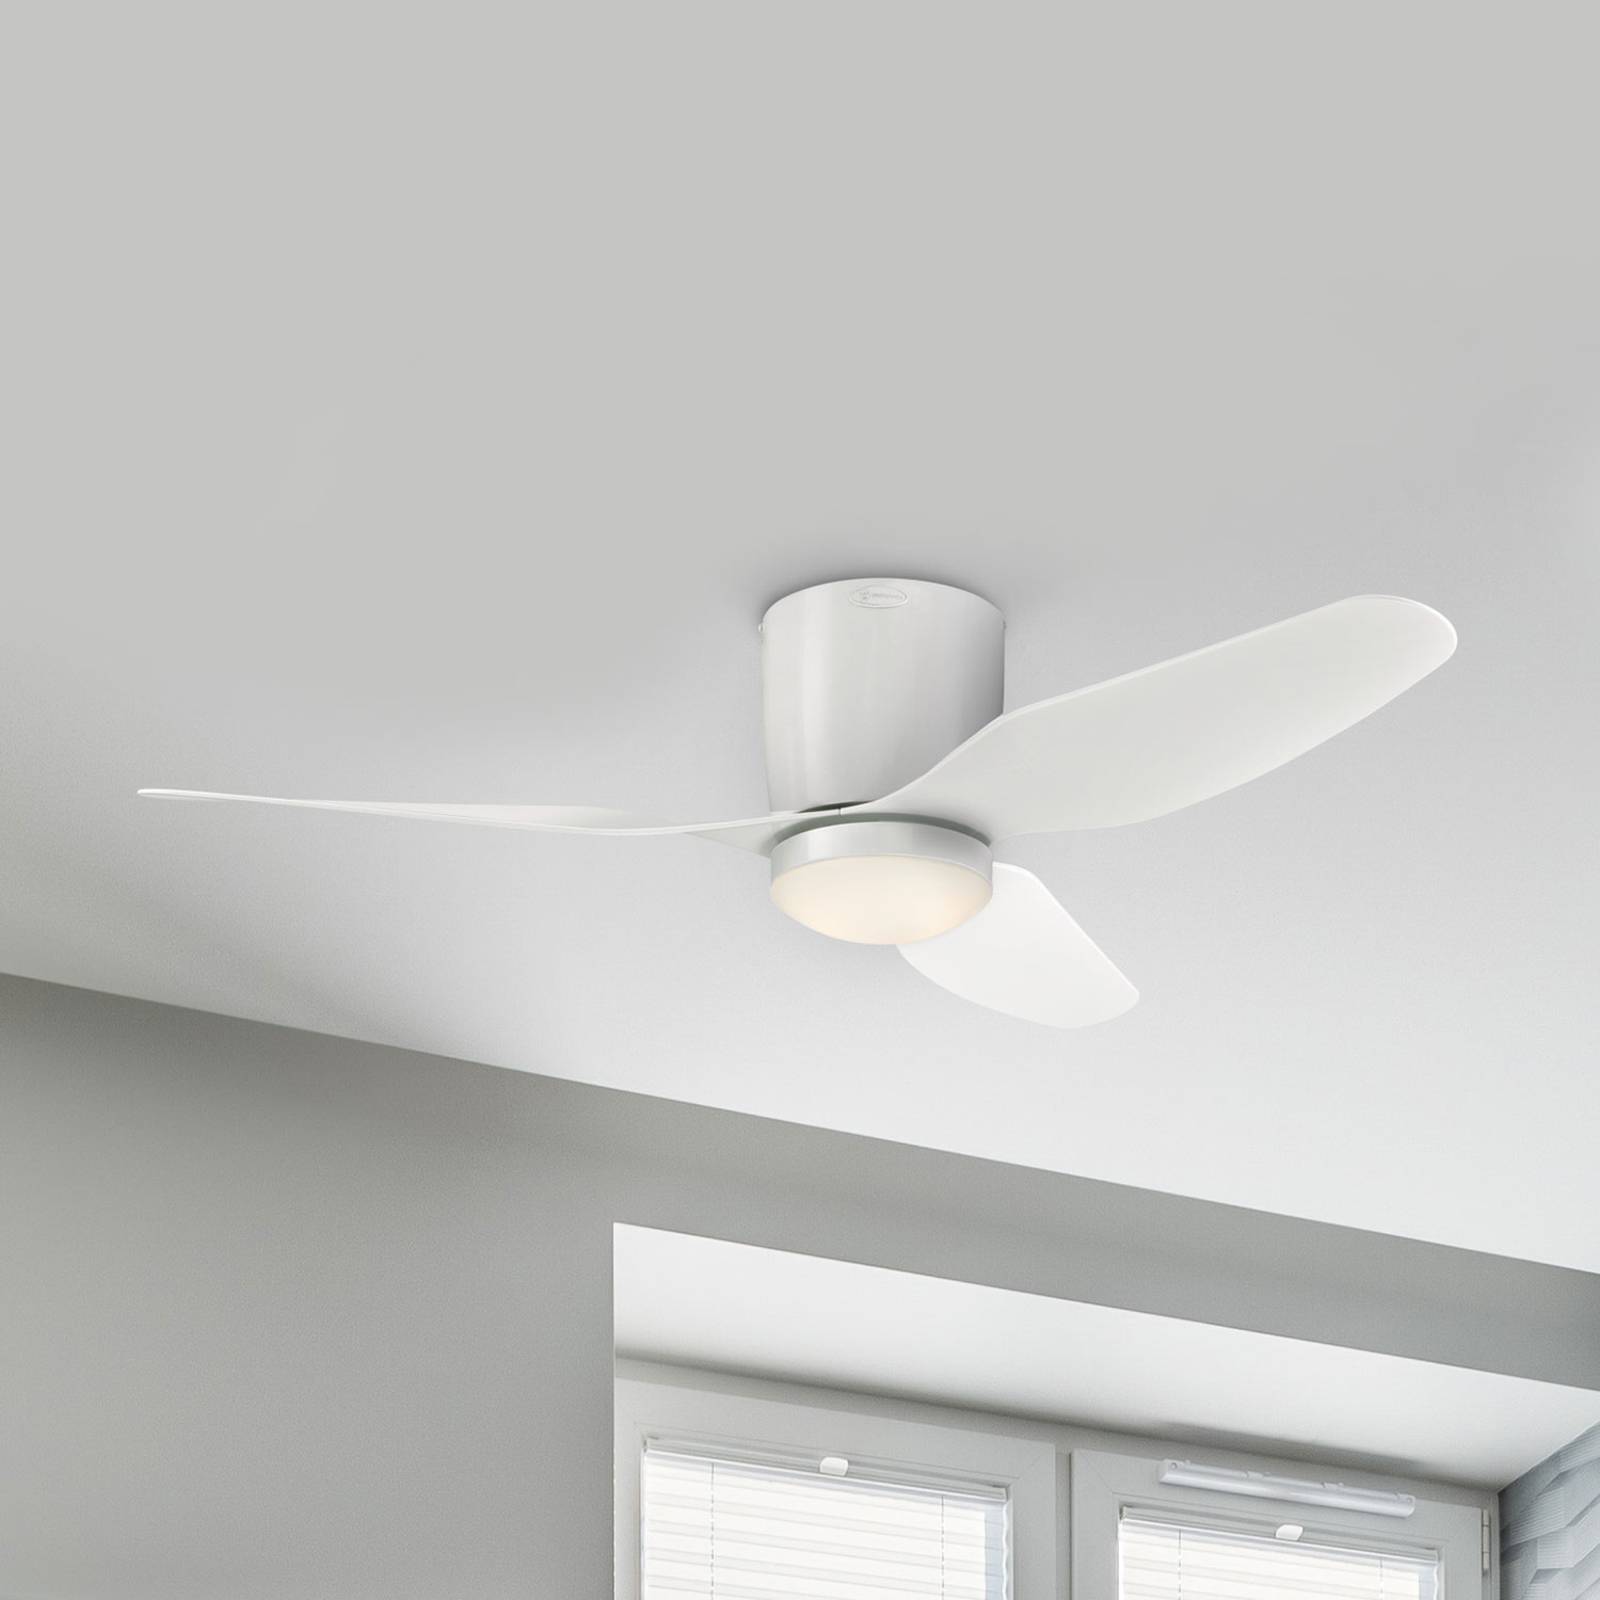 Image of Westinghouse Carla ventilatore con LED, bianco